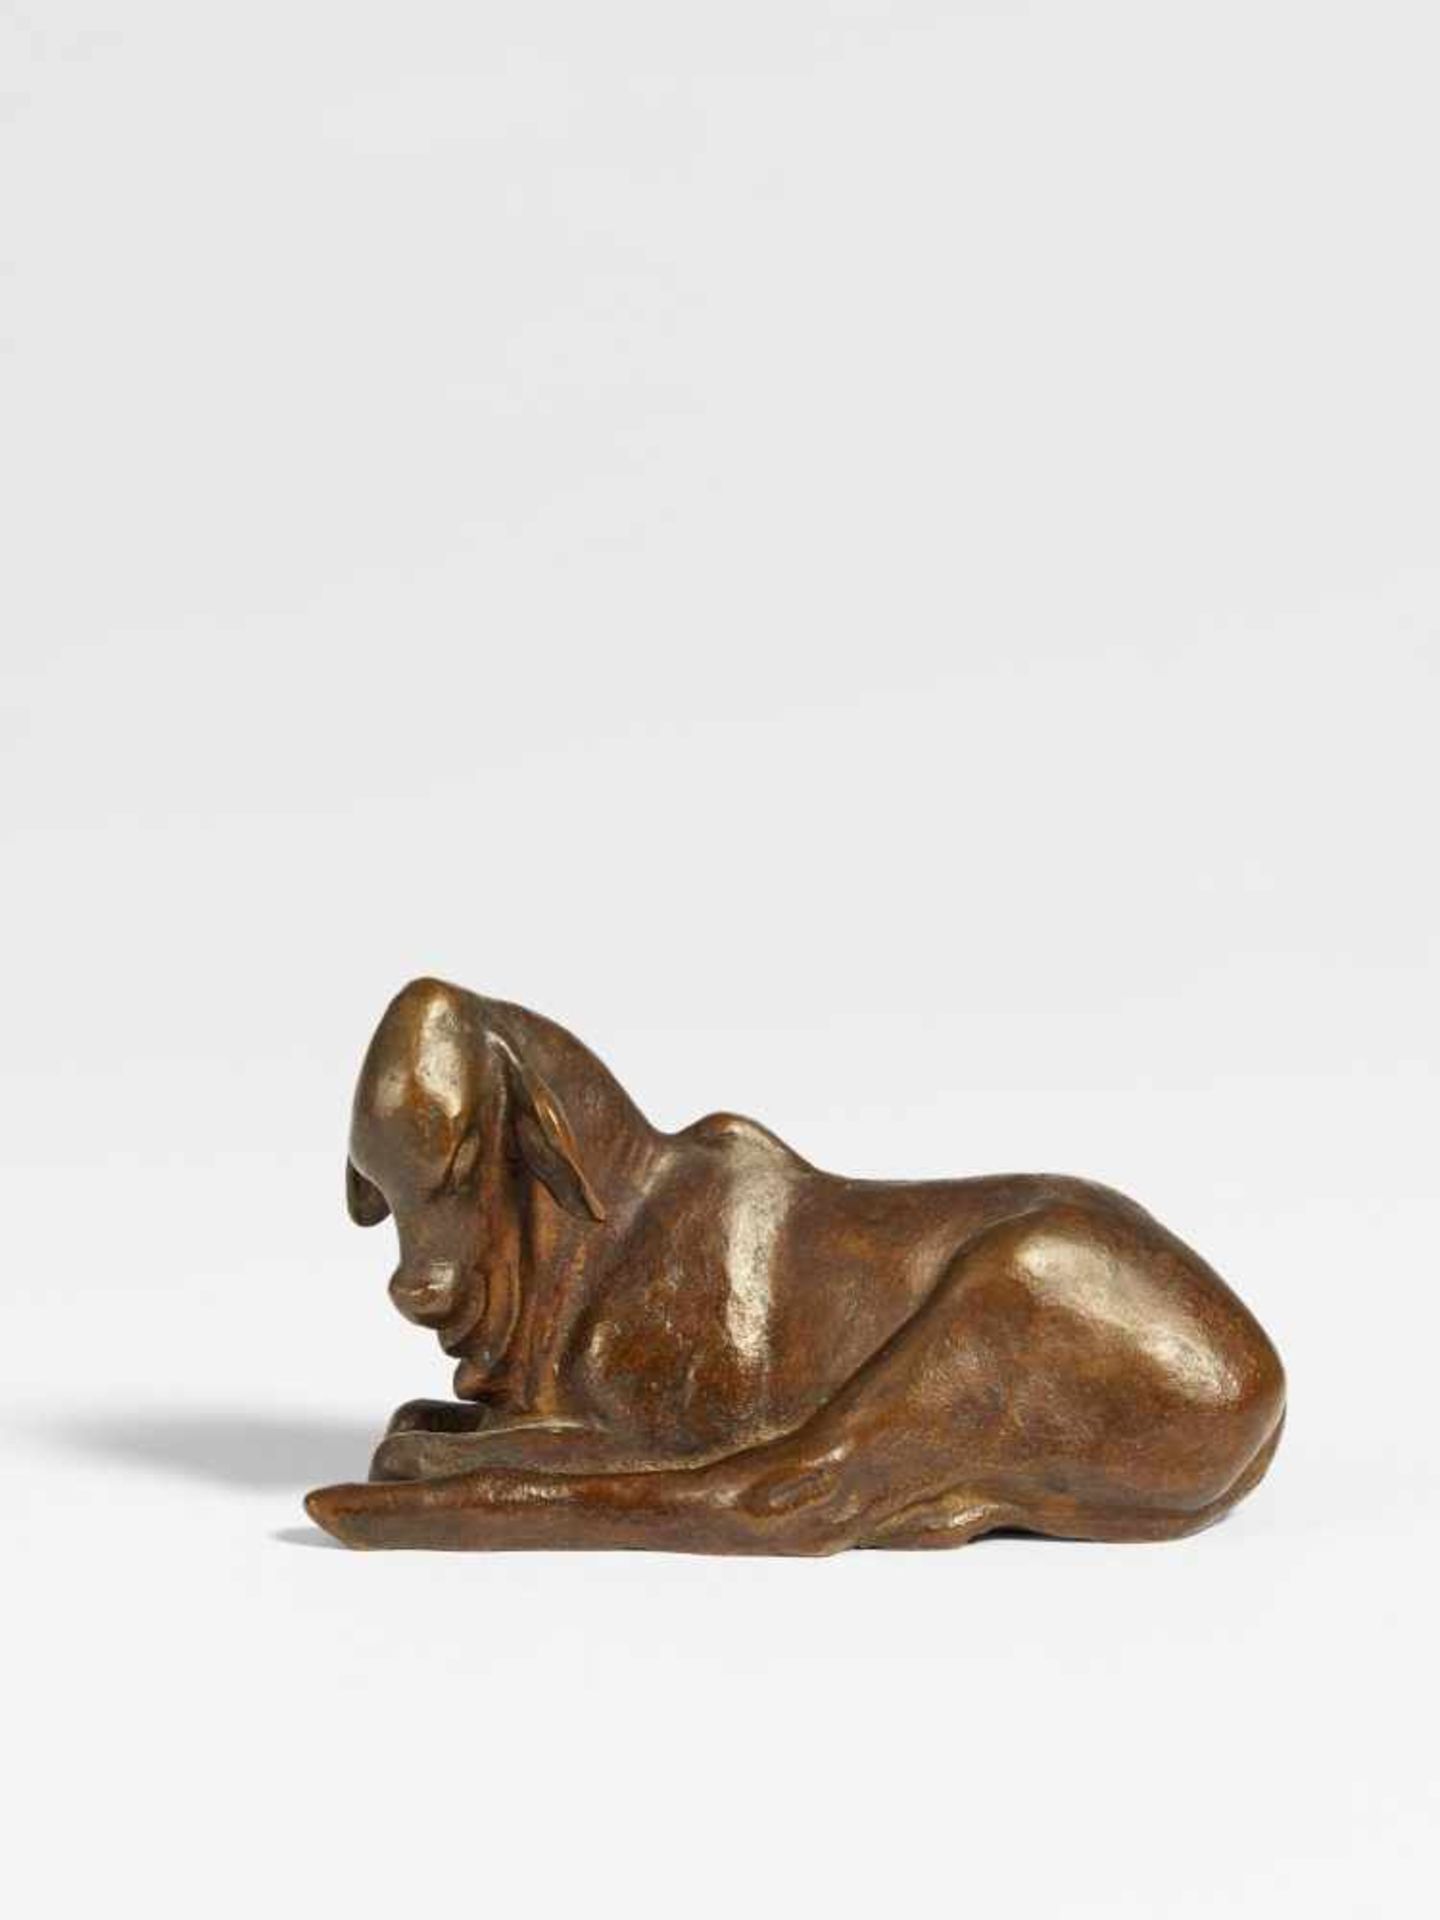 Sintenis, Renée1888 Glatz/Silesia - 1965 BerlinLiegendes Zebukalb. 1924 (design). Bronze, brown